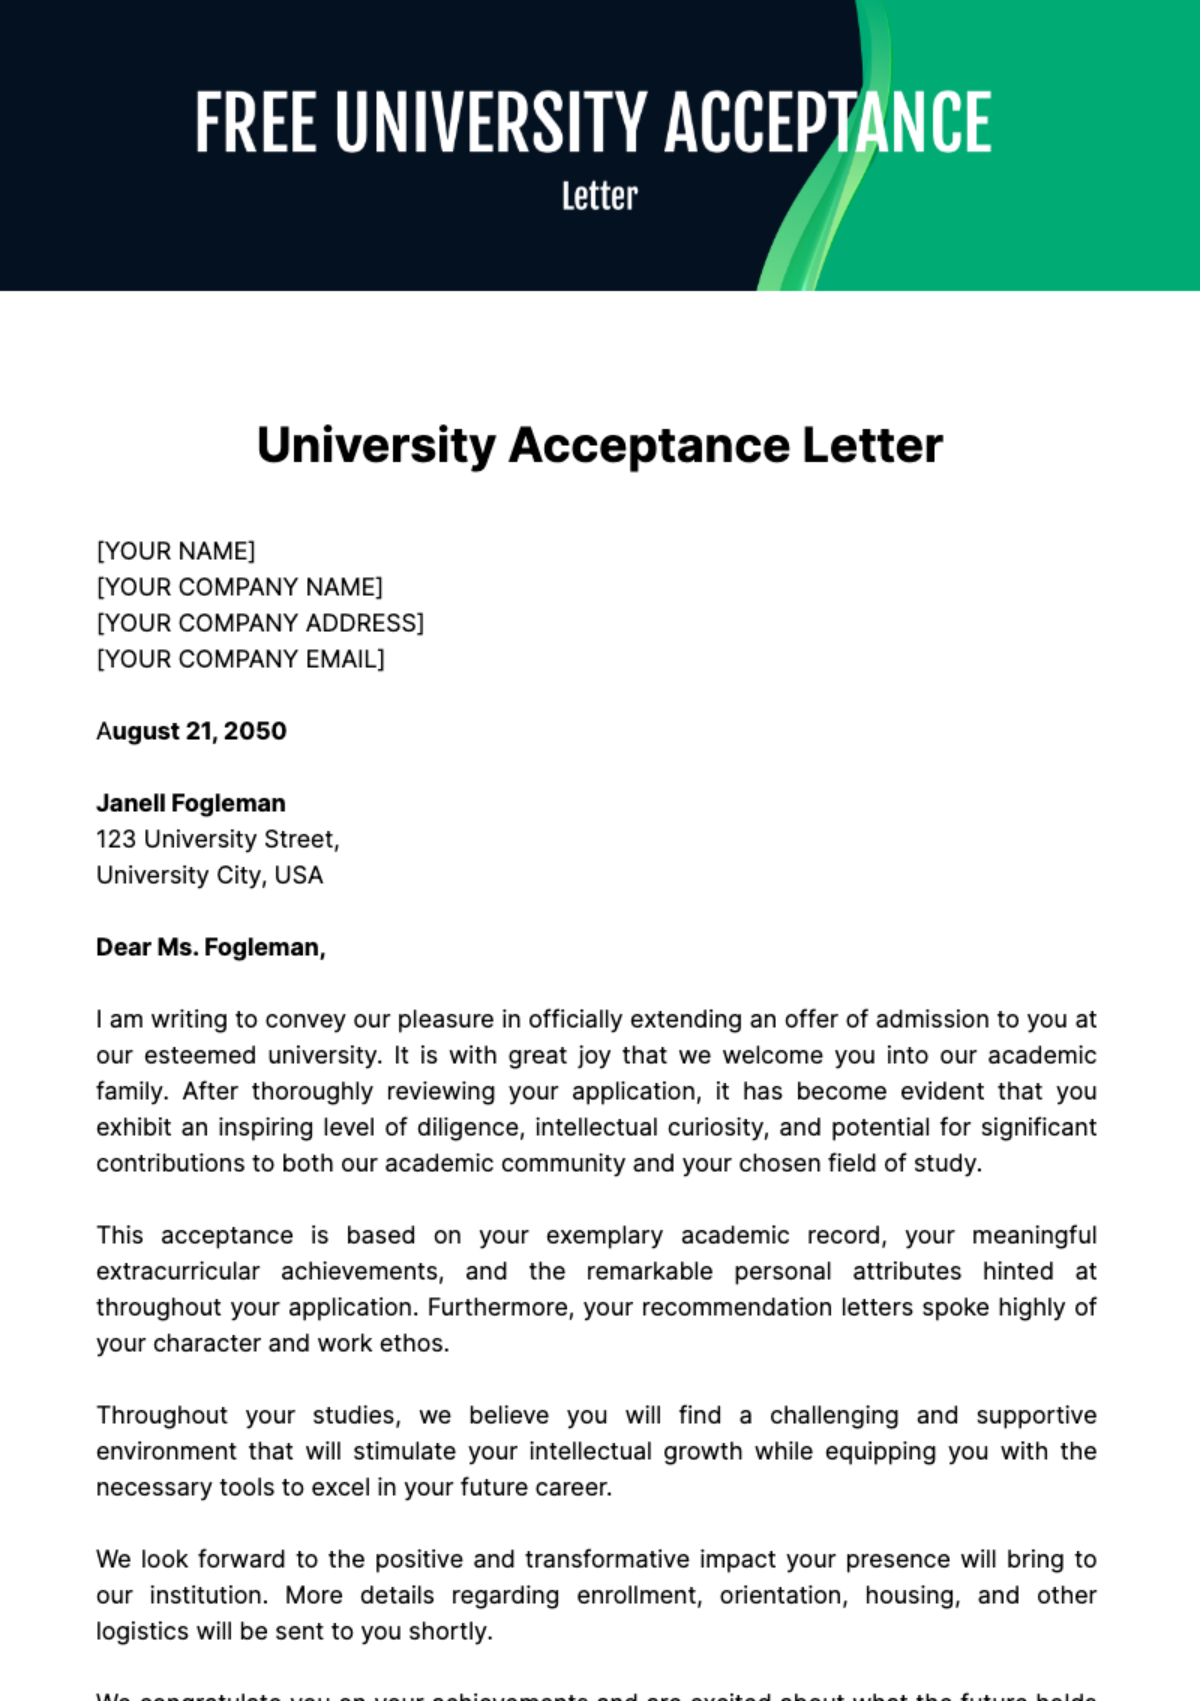 Free University Acceptance Letter Template